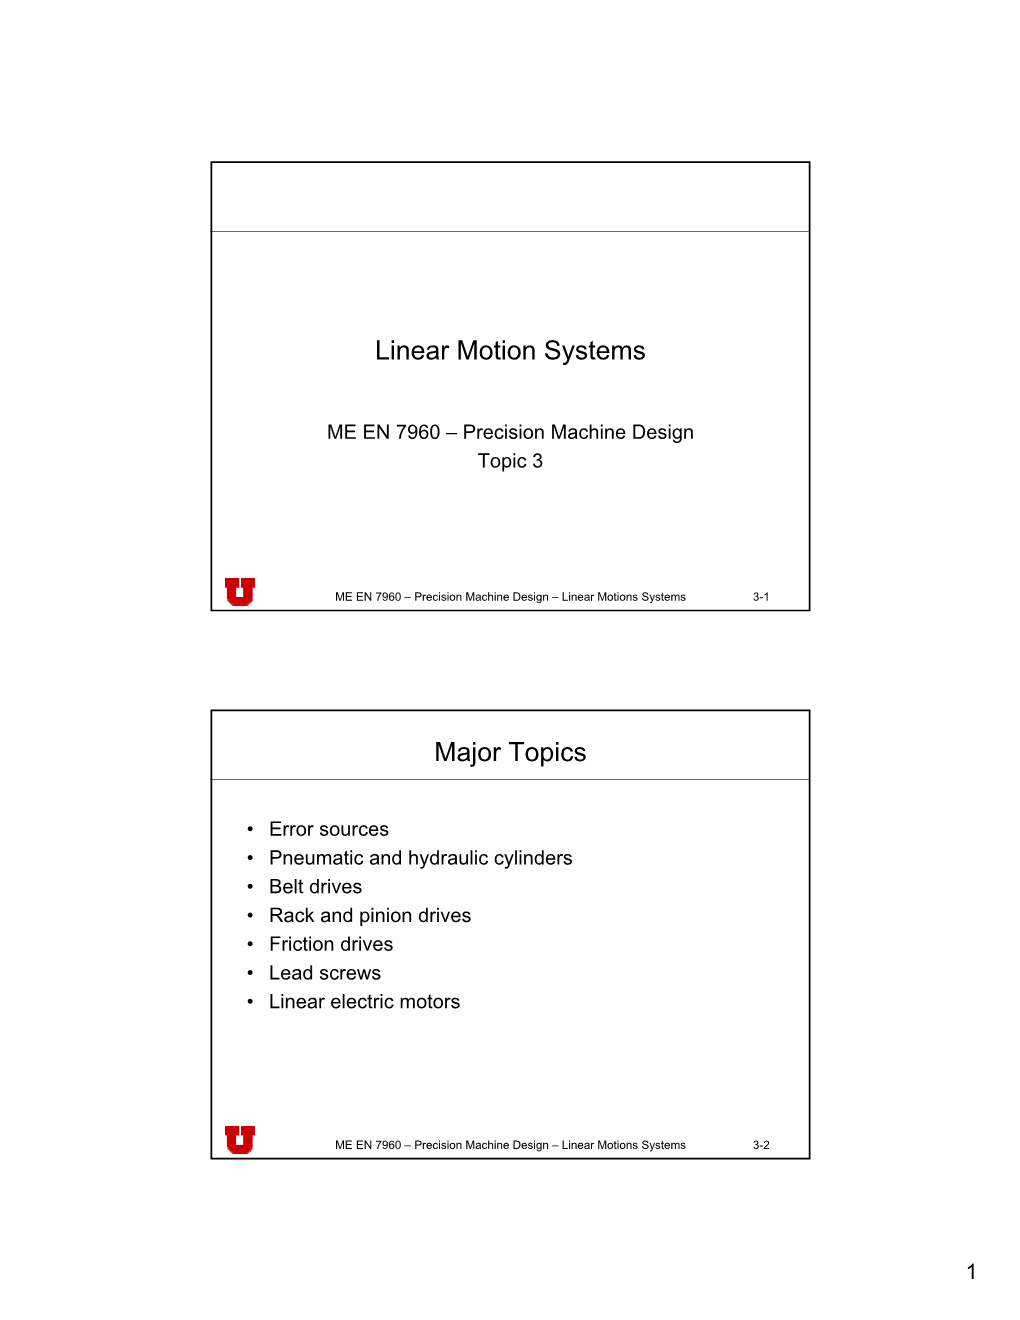 Linear Motion Systems Major Topics